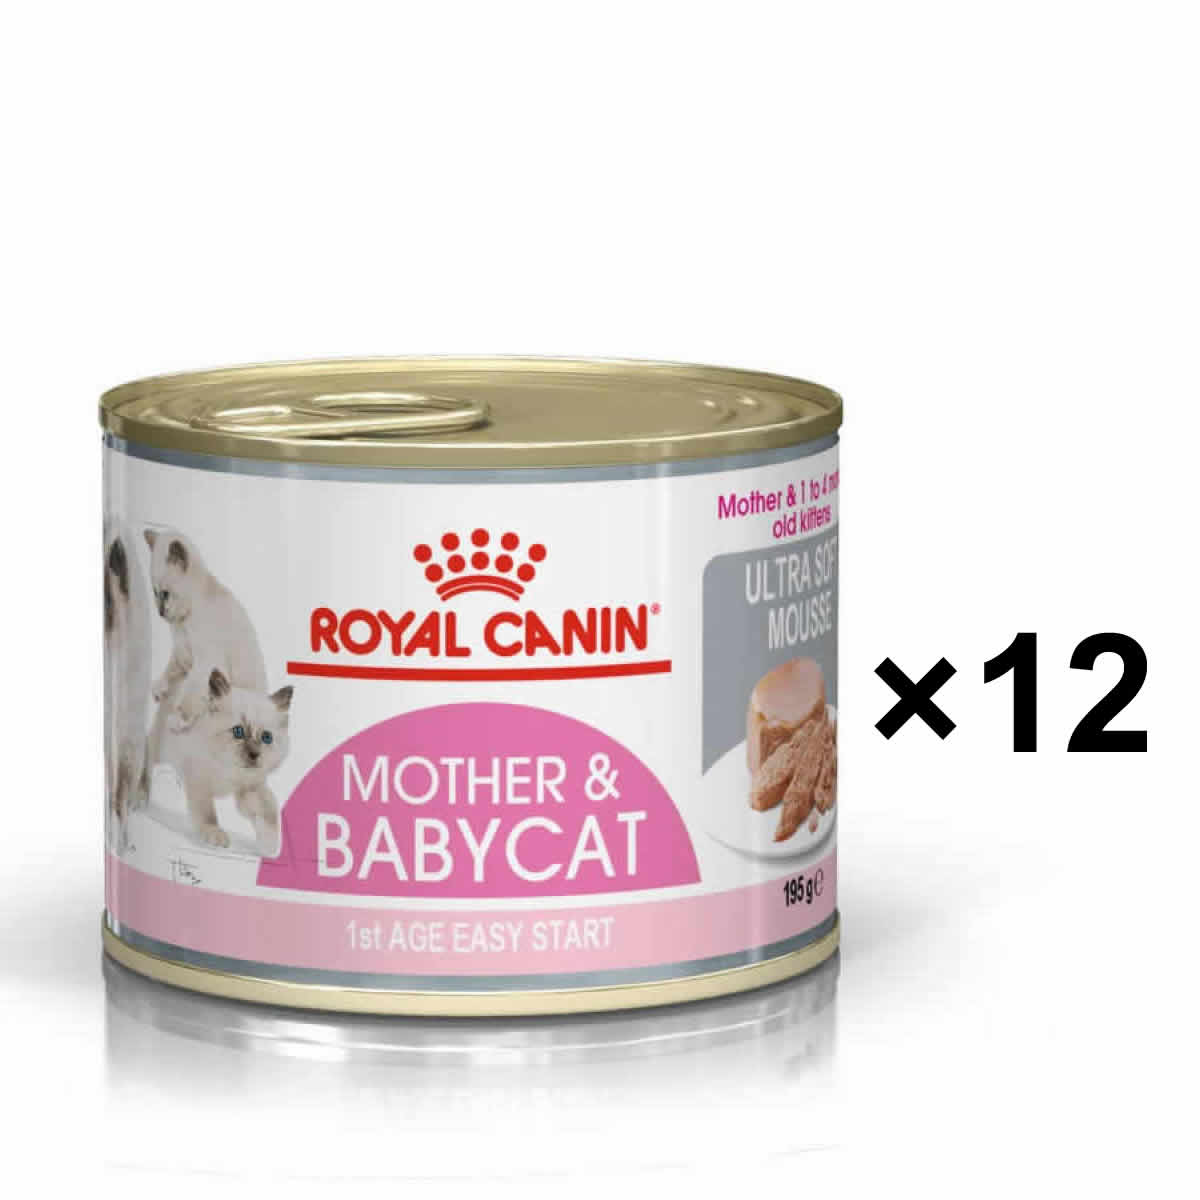 Royal Canin Mother & Babycat Ultra Soft Mousse แบบกระป๋อง 195g x 12กระป๋อง